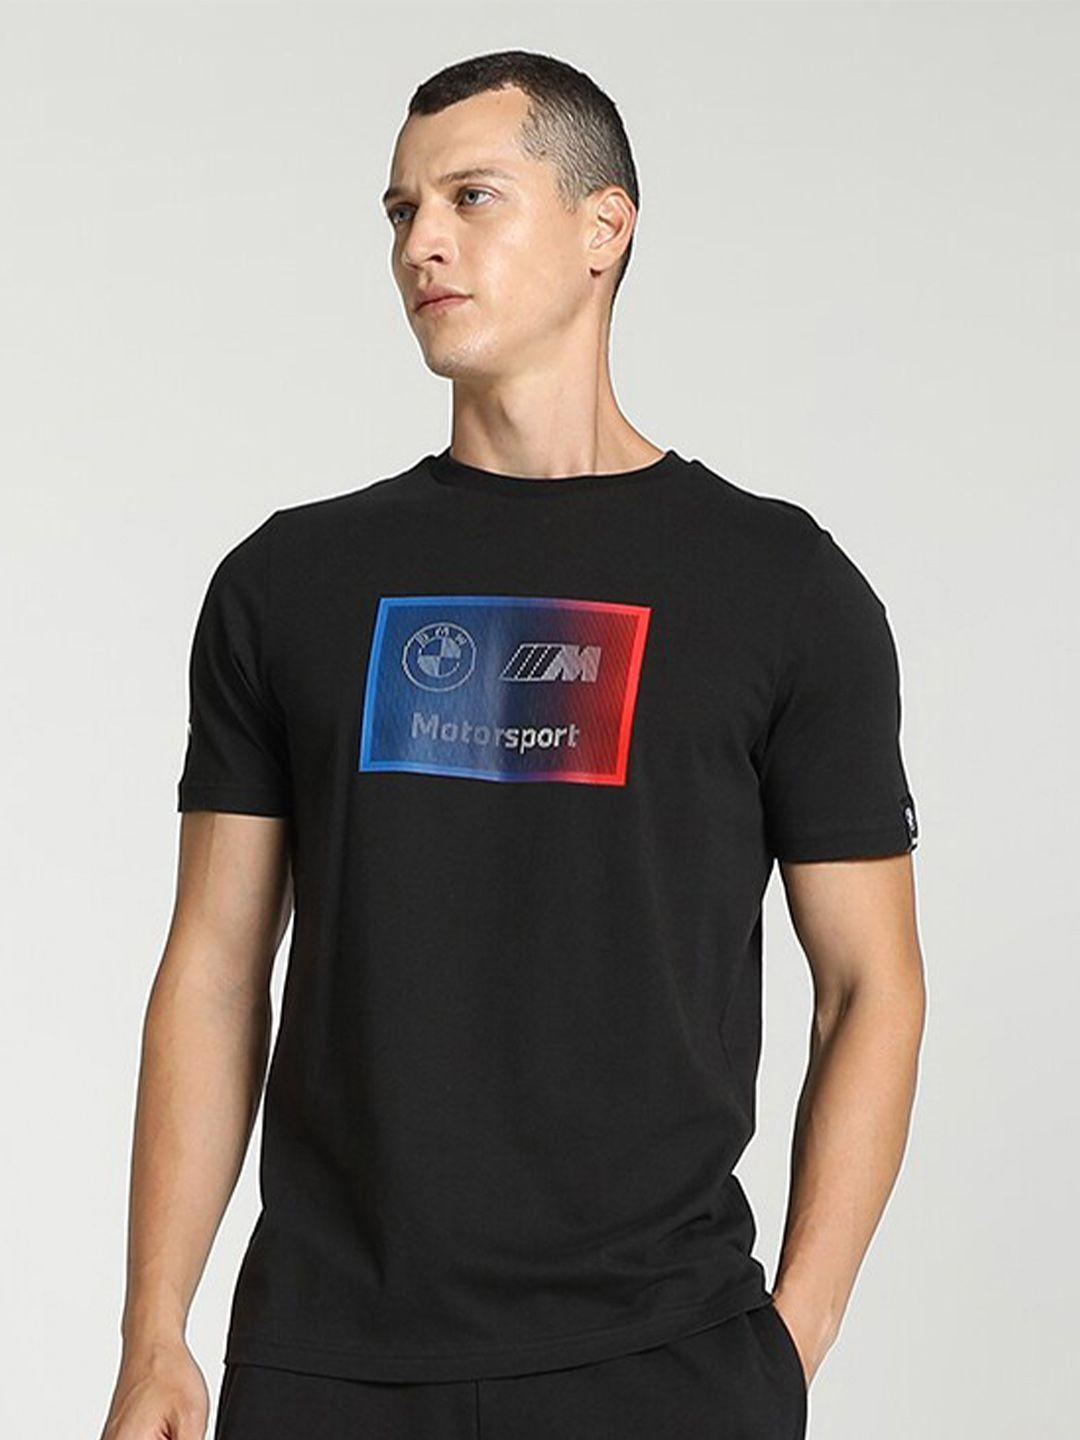 puma motorsport graphic printed cotton t-shirt